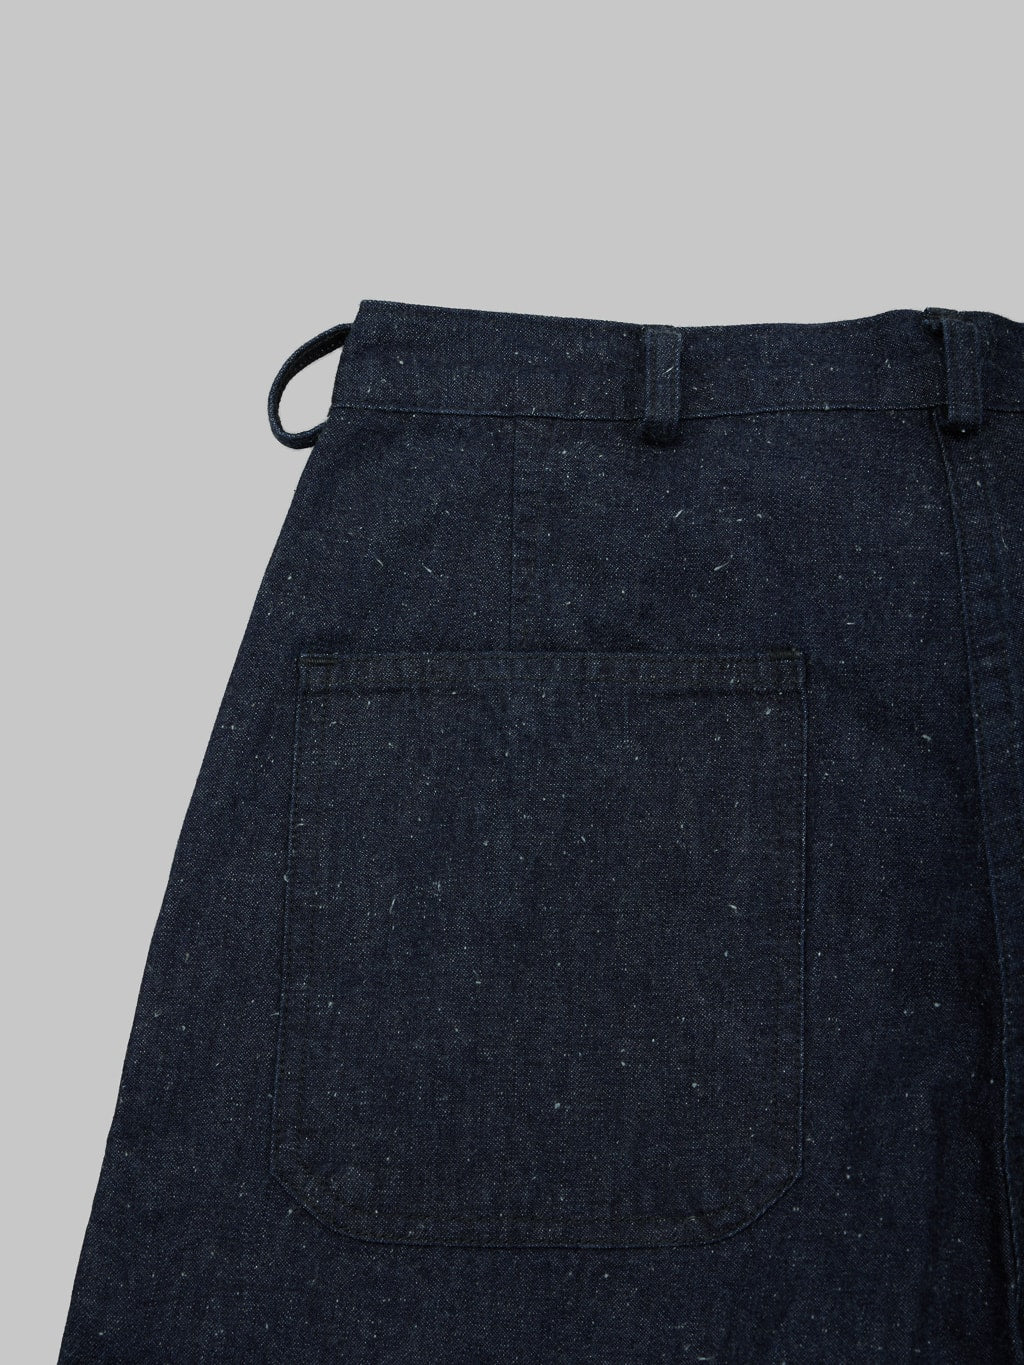 tcb jeans usn seamens denim trousers  back pocket